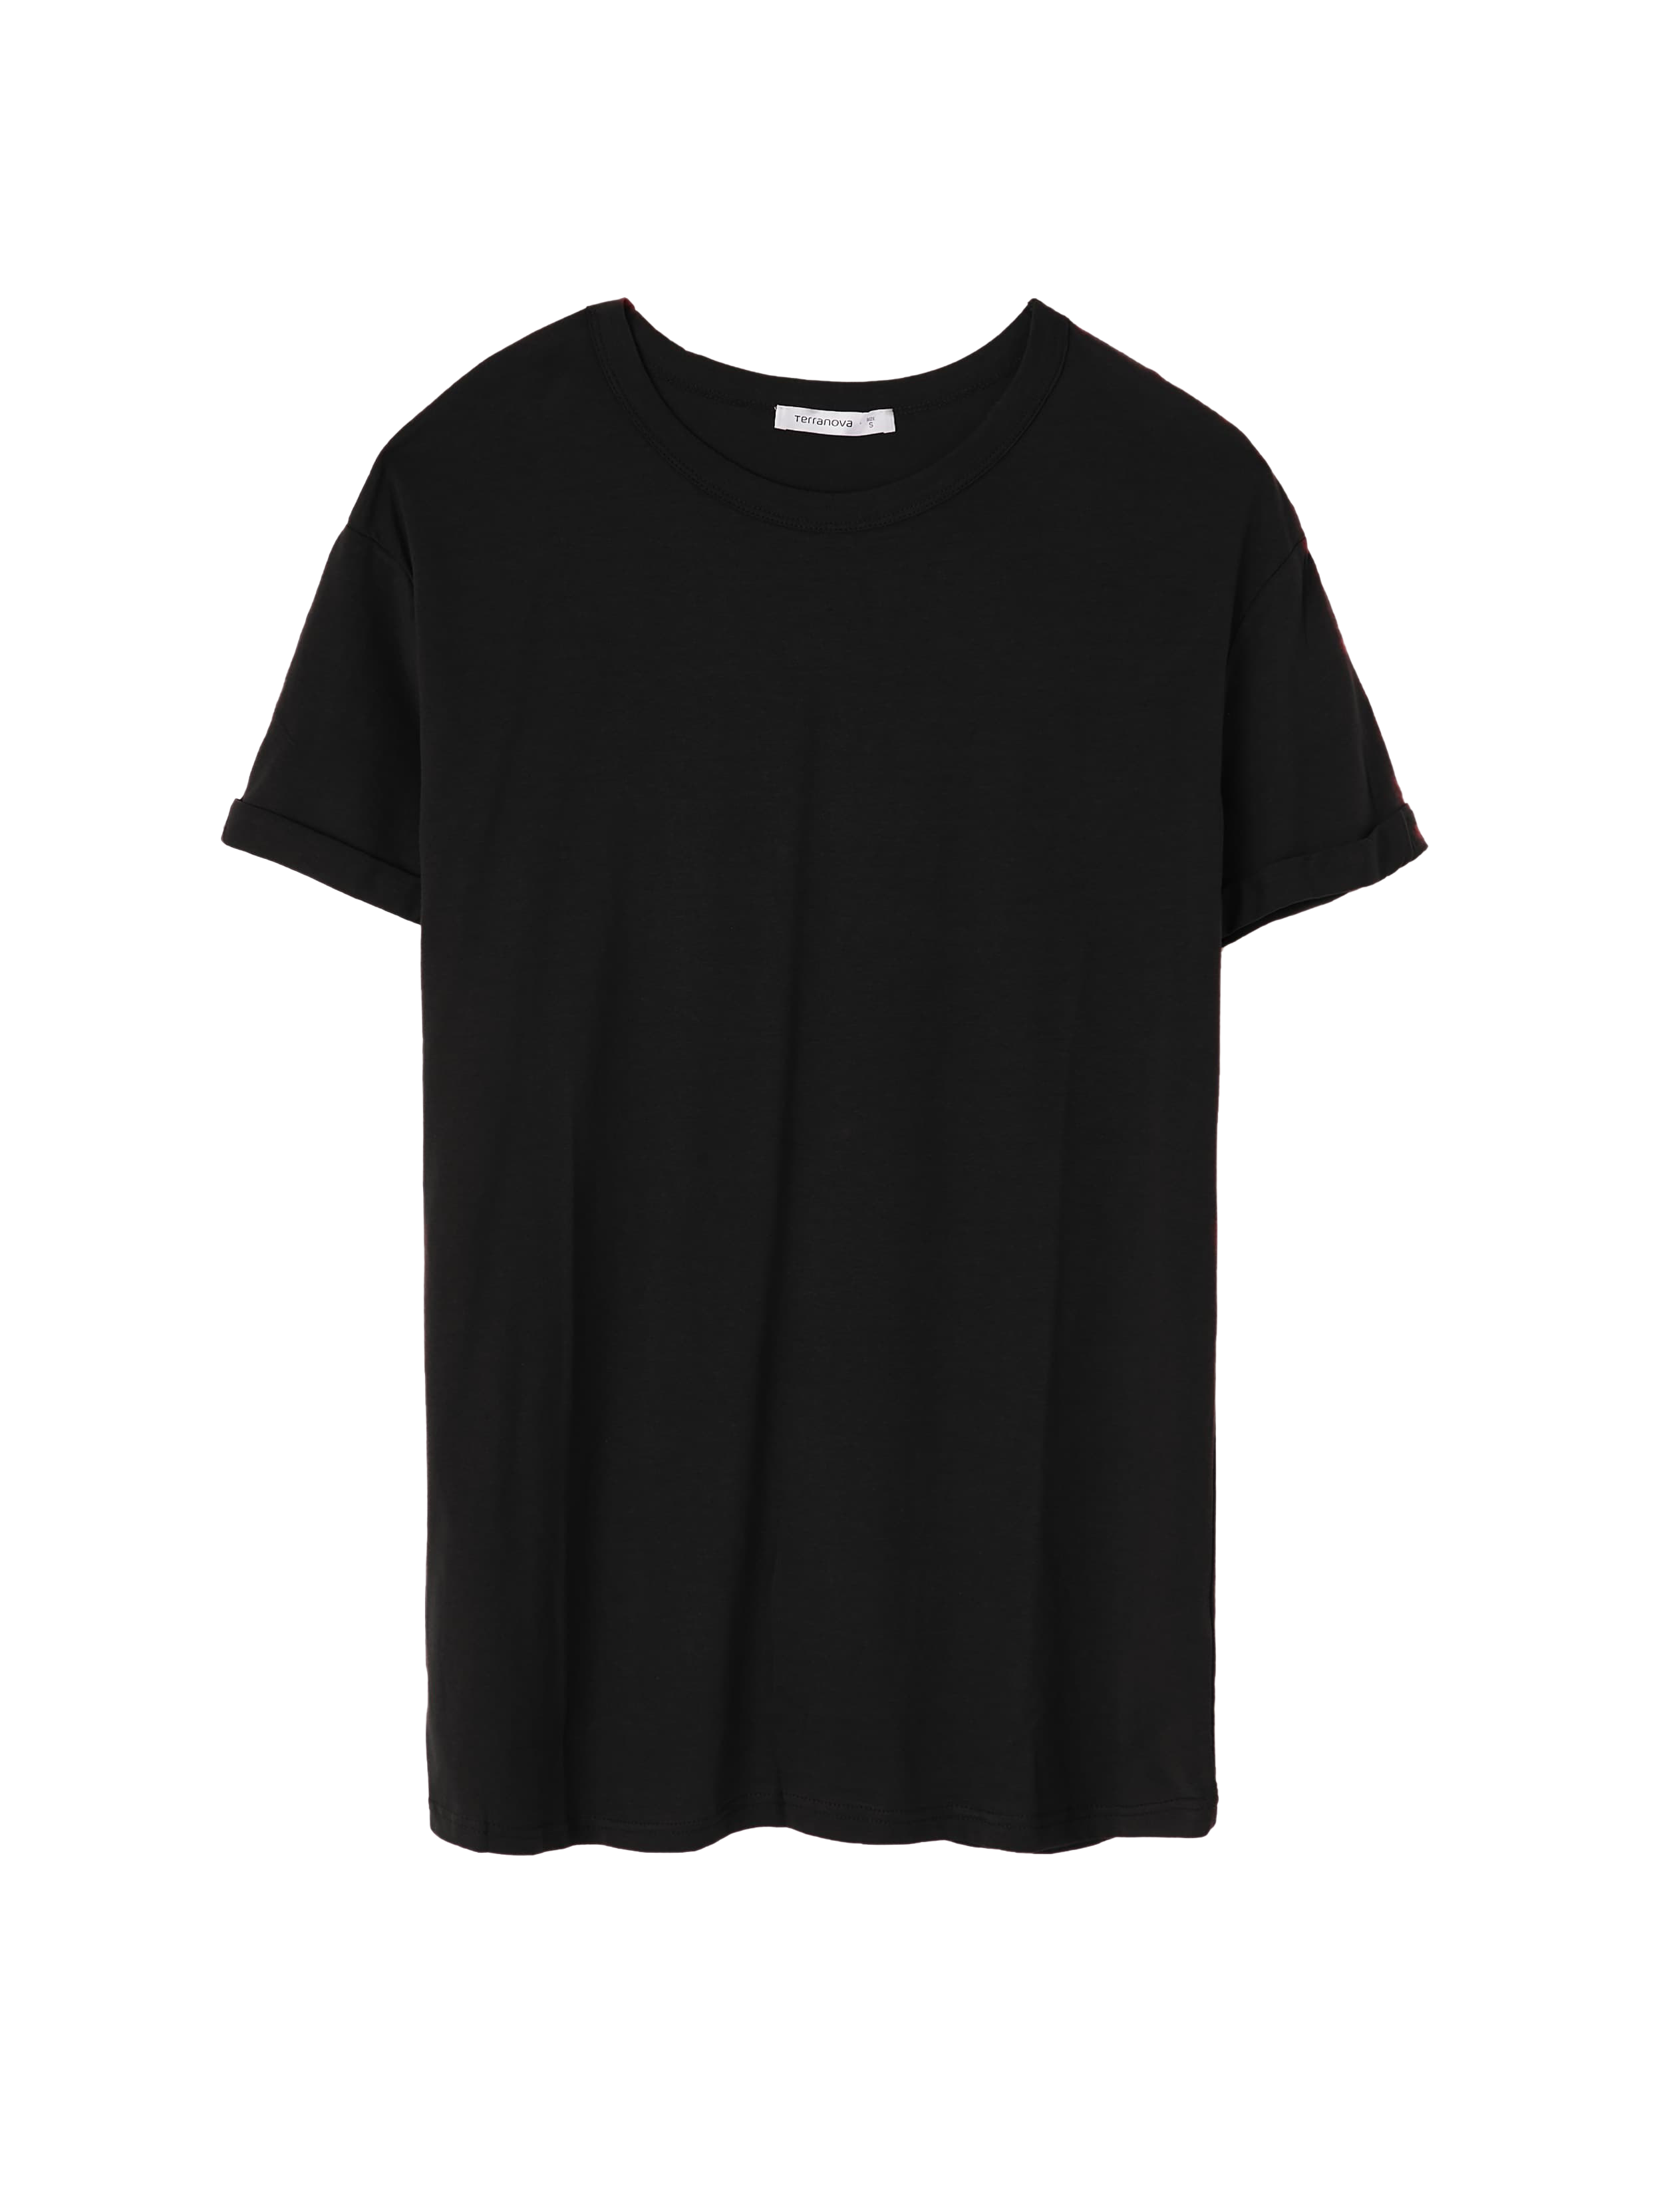 Download Plain Black T-Shirt PNG Pic | PNG Arts